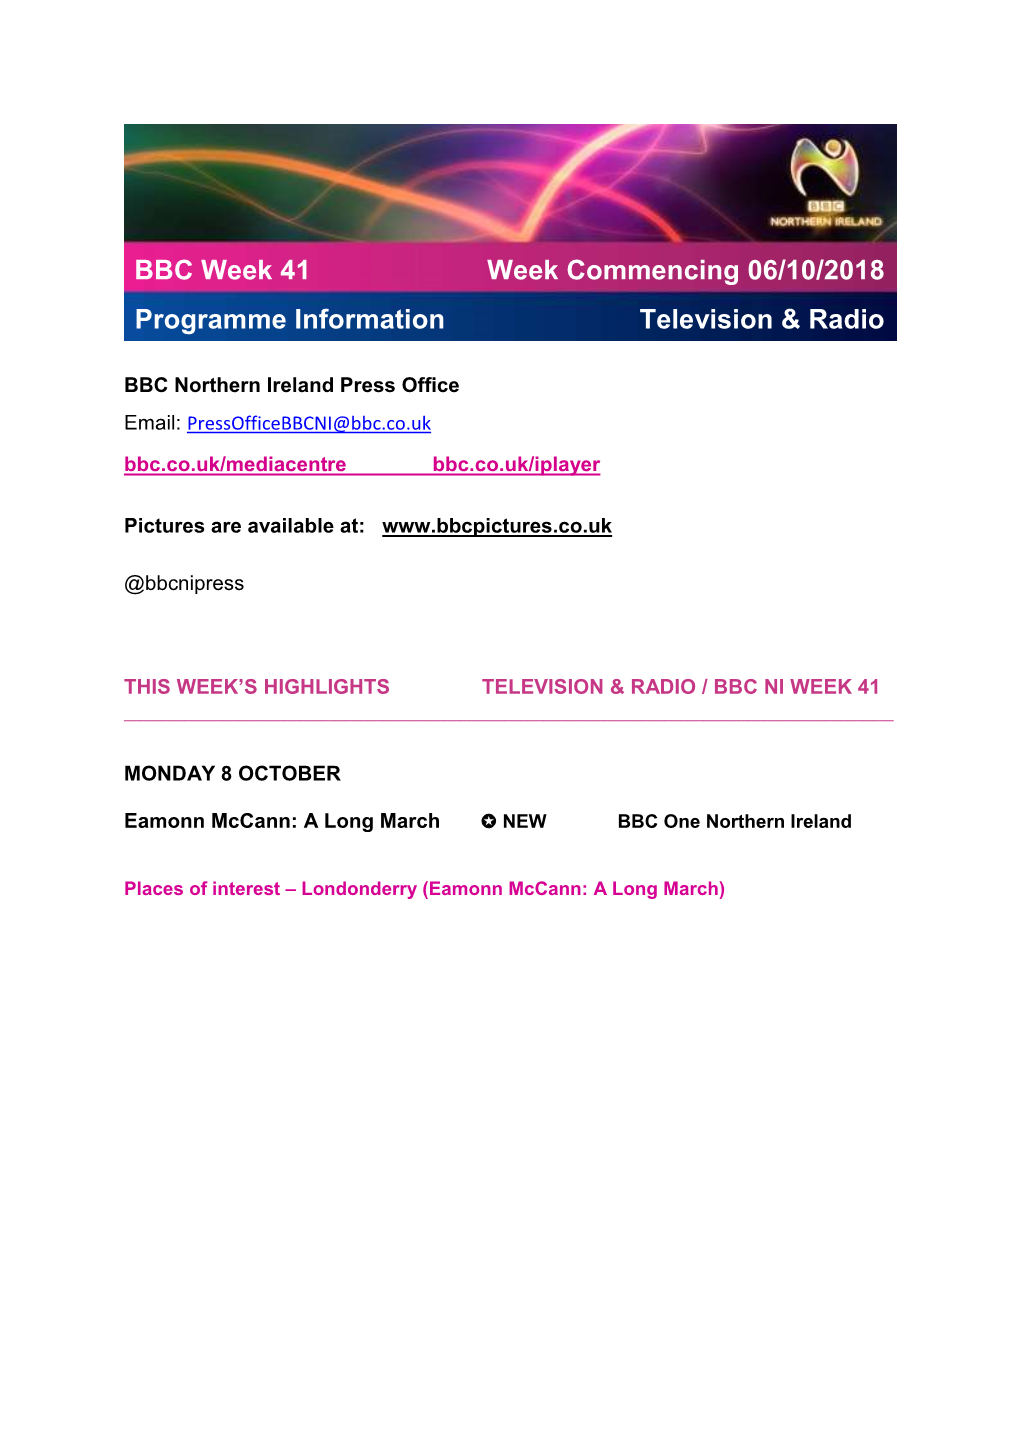 BBC Week 41 Programme Information Week Commencing 06/10